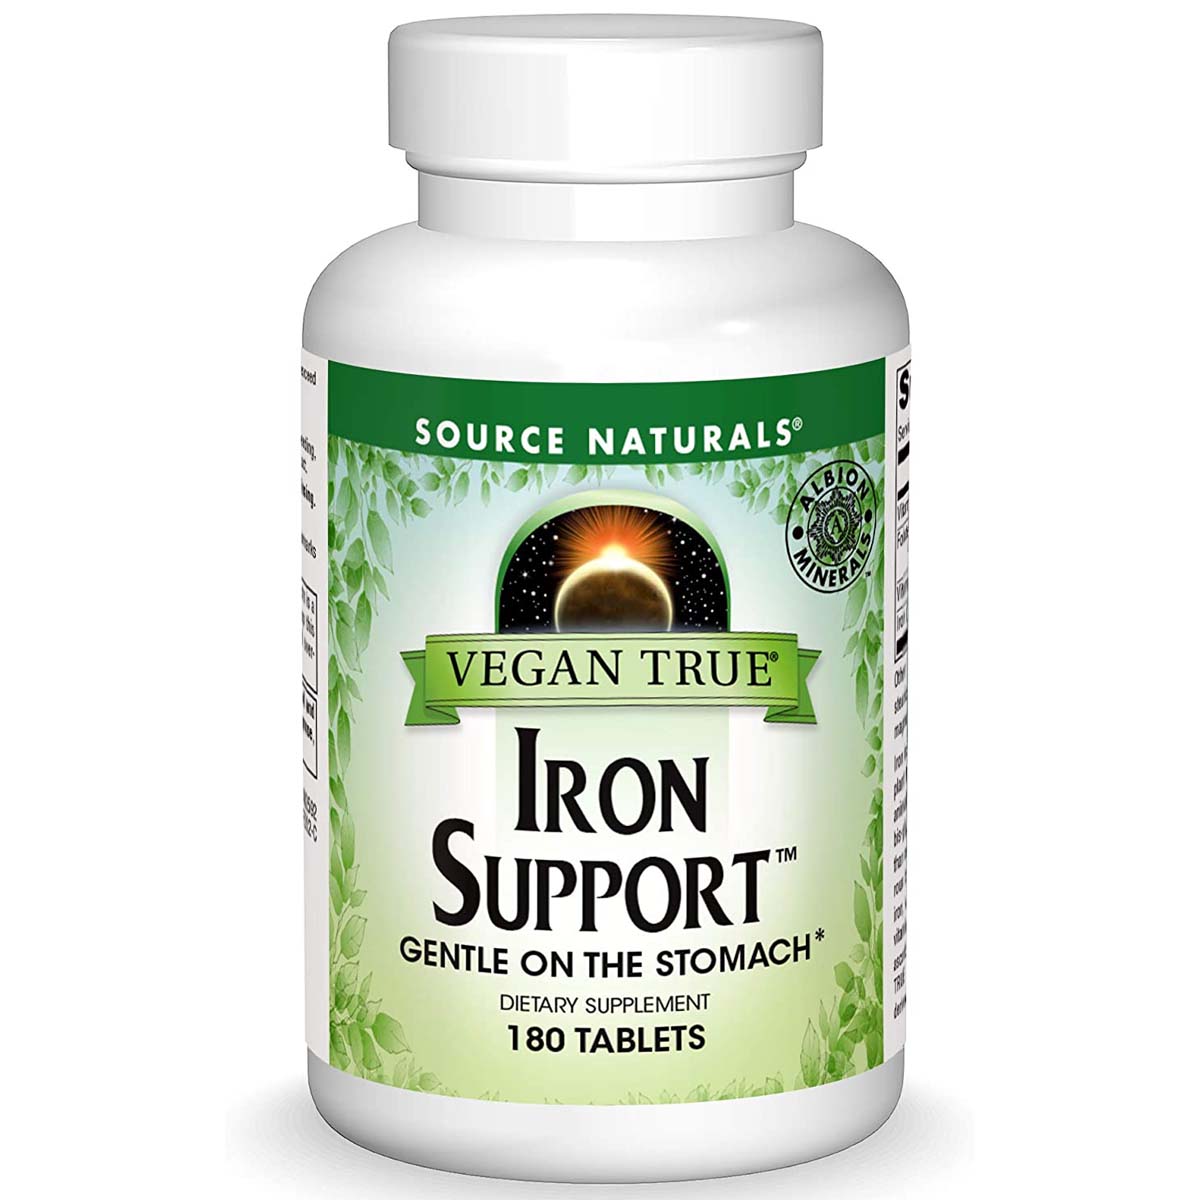 Source Naturals Vegan True Iron Support, 180 Tablets